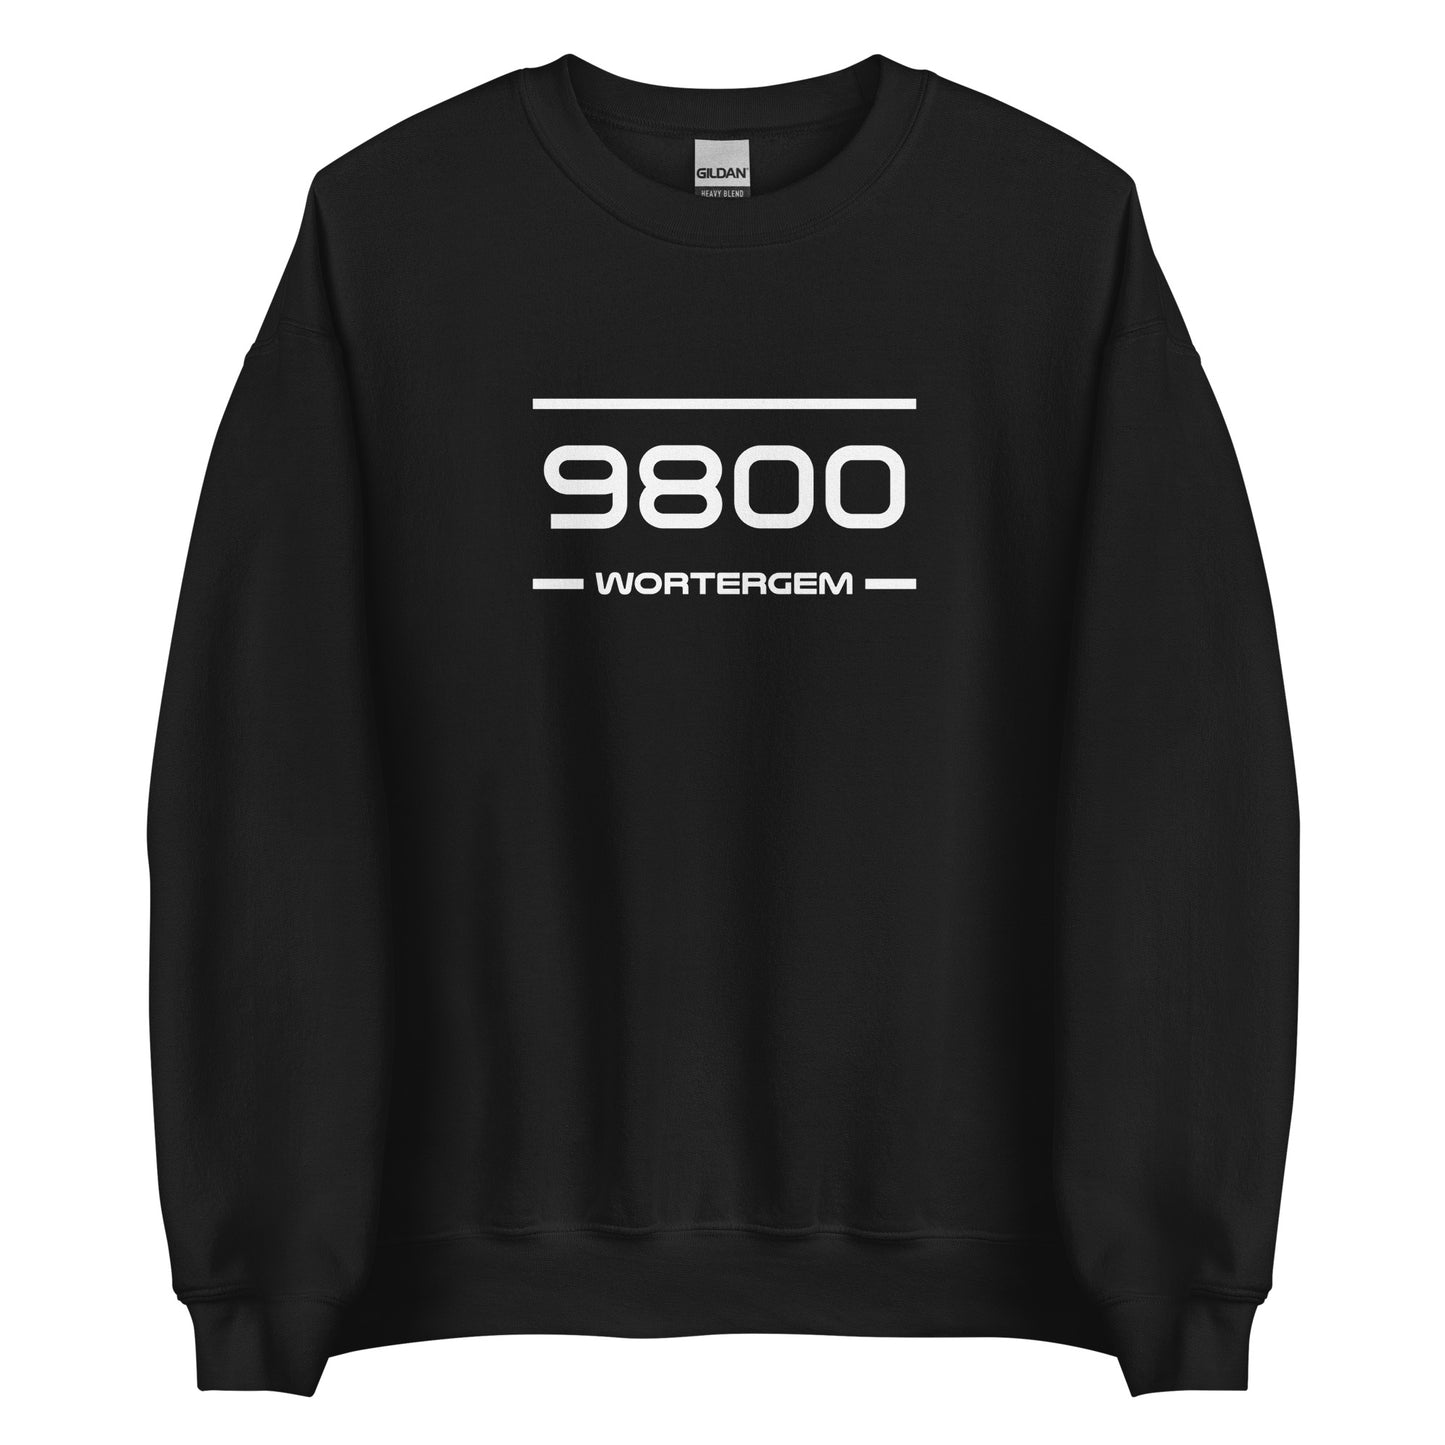 Sweater - 9800 - Wortergem (M/V)